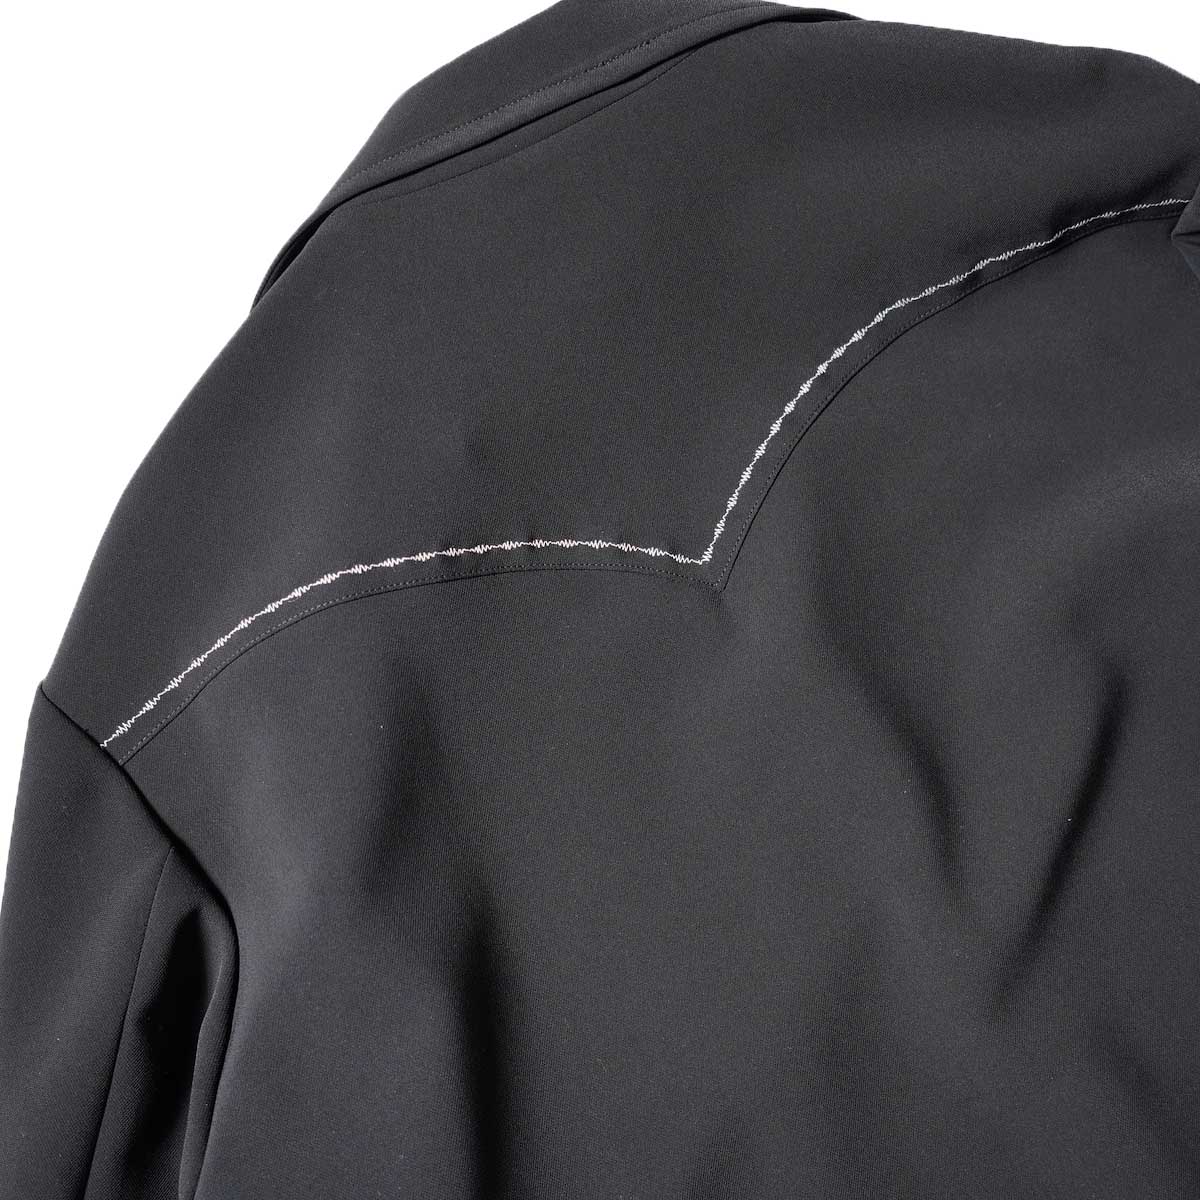 Needles / WESTERN LEISURE JACKET - PE/PU DOUBLE CLOTH (Black)ディティール